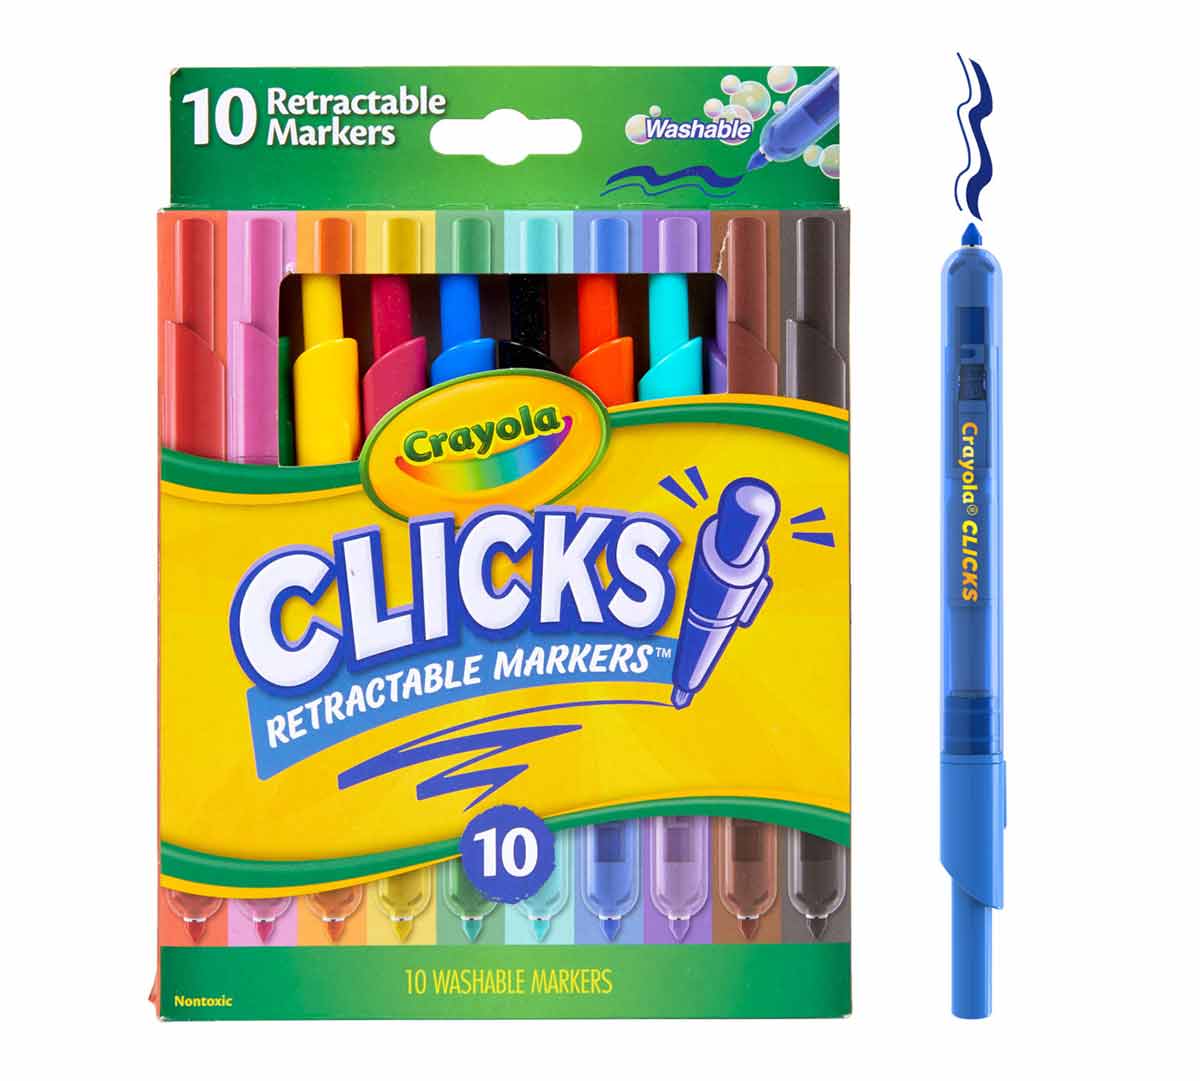 https://shop.crayola.com/on/demandware.static/-/Sites-crayola-storefront/default/dw46dedae7/images/58-8370_Clicks-Retractable-Markers-10ct_PDP_Main.jpg